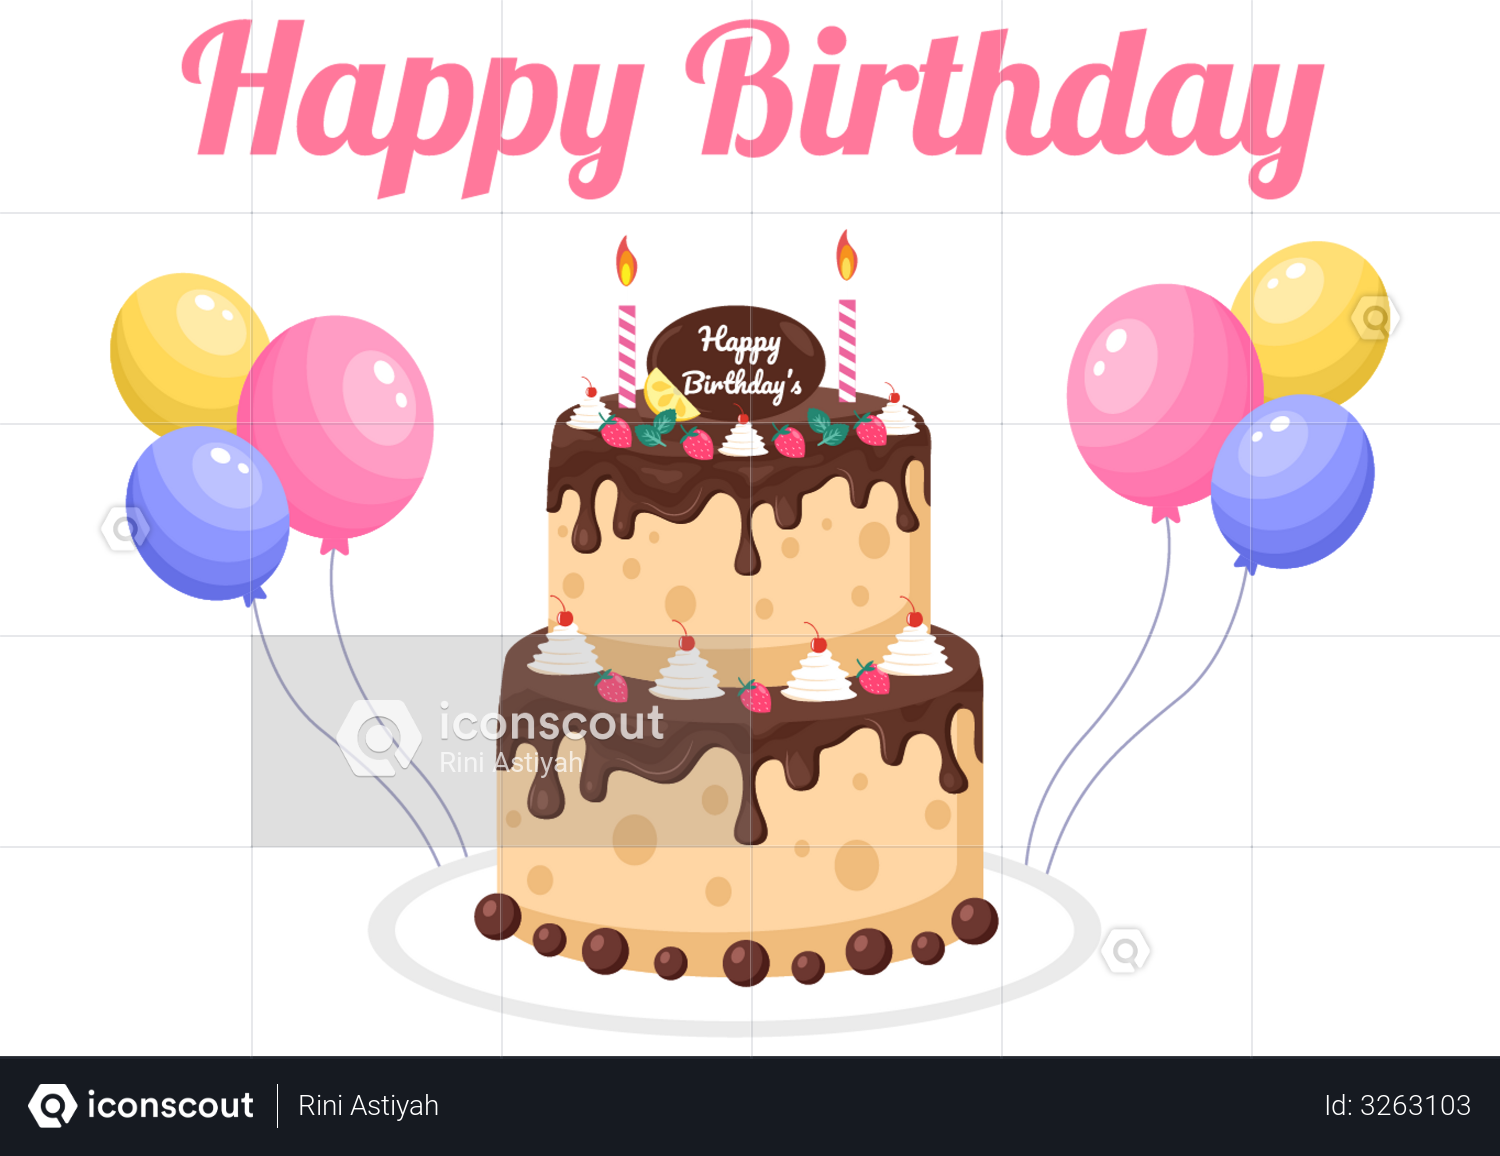 How to Draw a Happy Birthday Cake EASY 🎂🎈 - YouTube